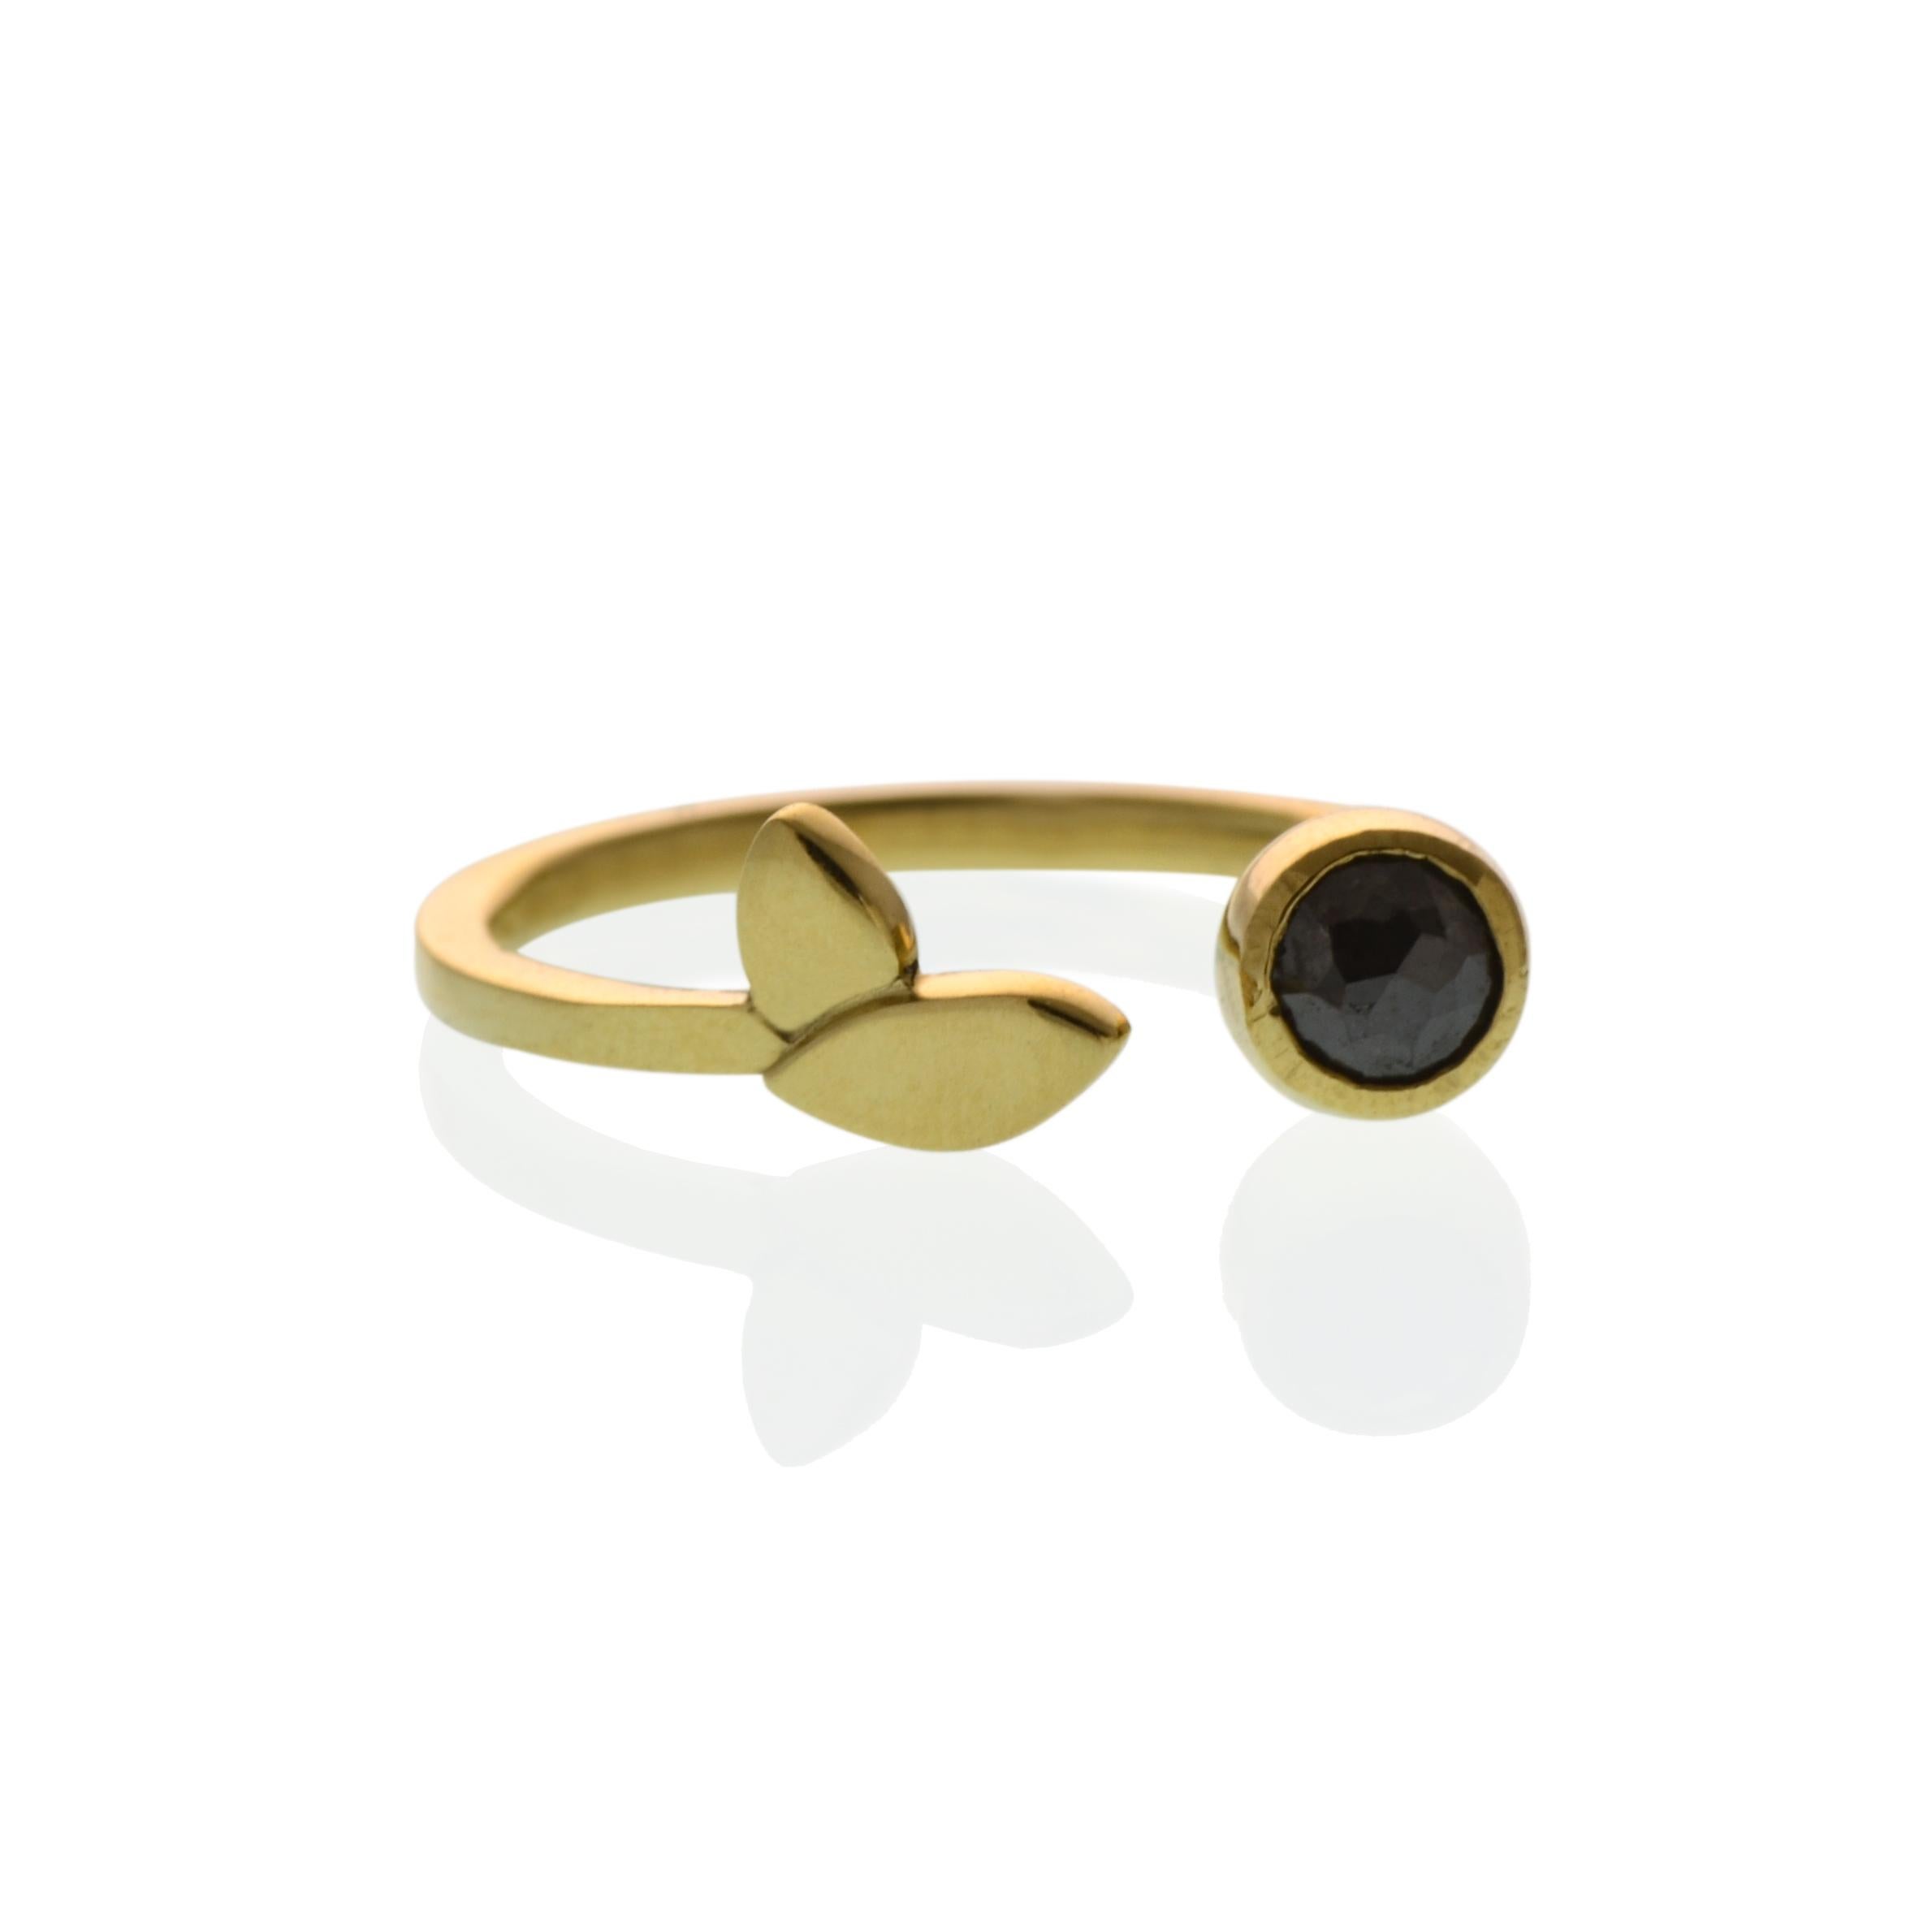 Artisan Susan Crow Studio Gold and Black Diamond Flora Leaf Ring For Sale